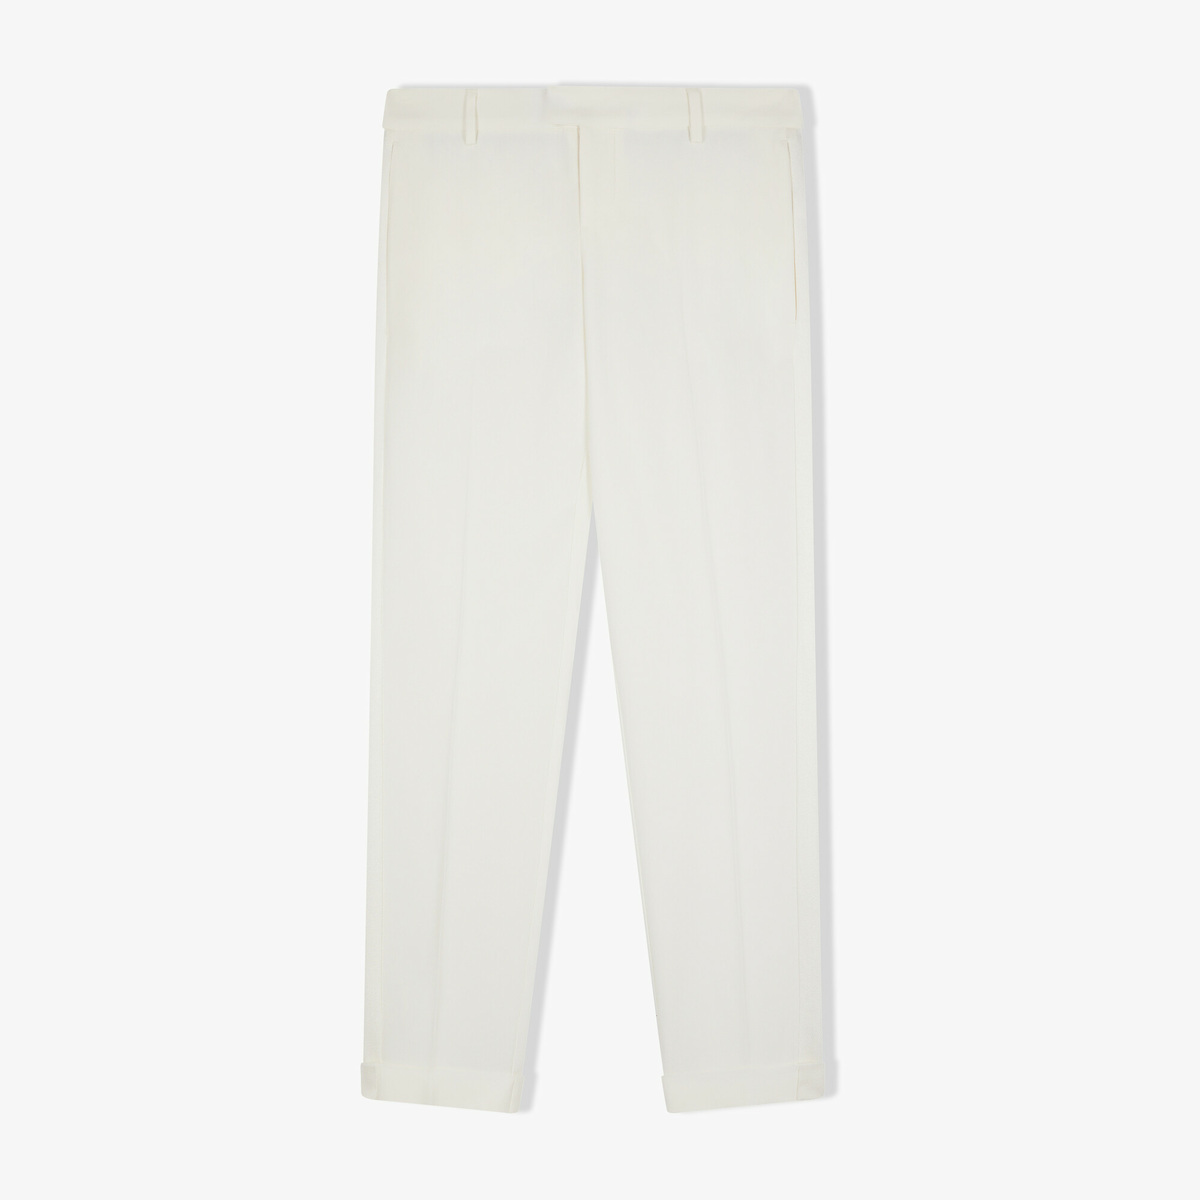 Pantalon de Smoking Claude, Blanc - Coupe 7/8 à large revers - Satin - image 1